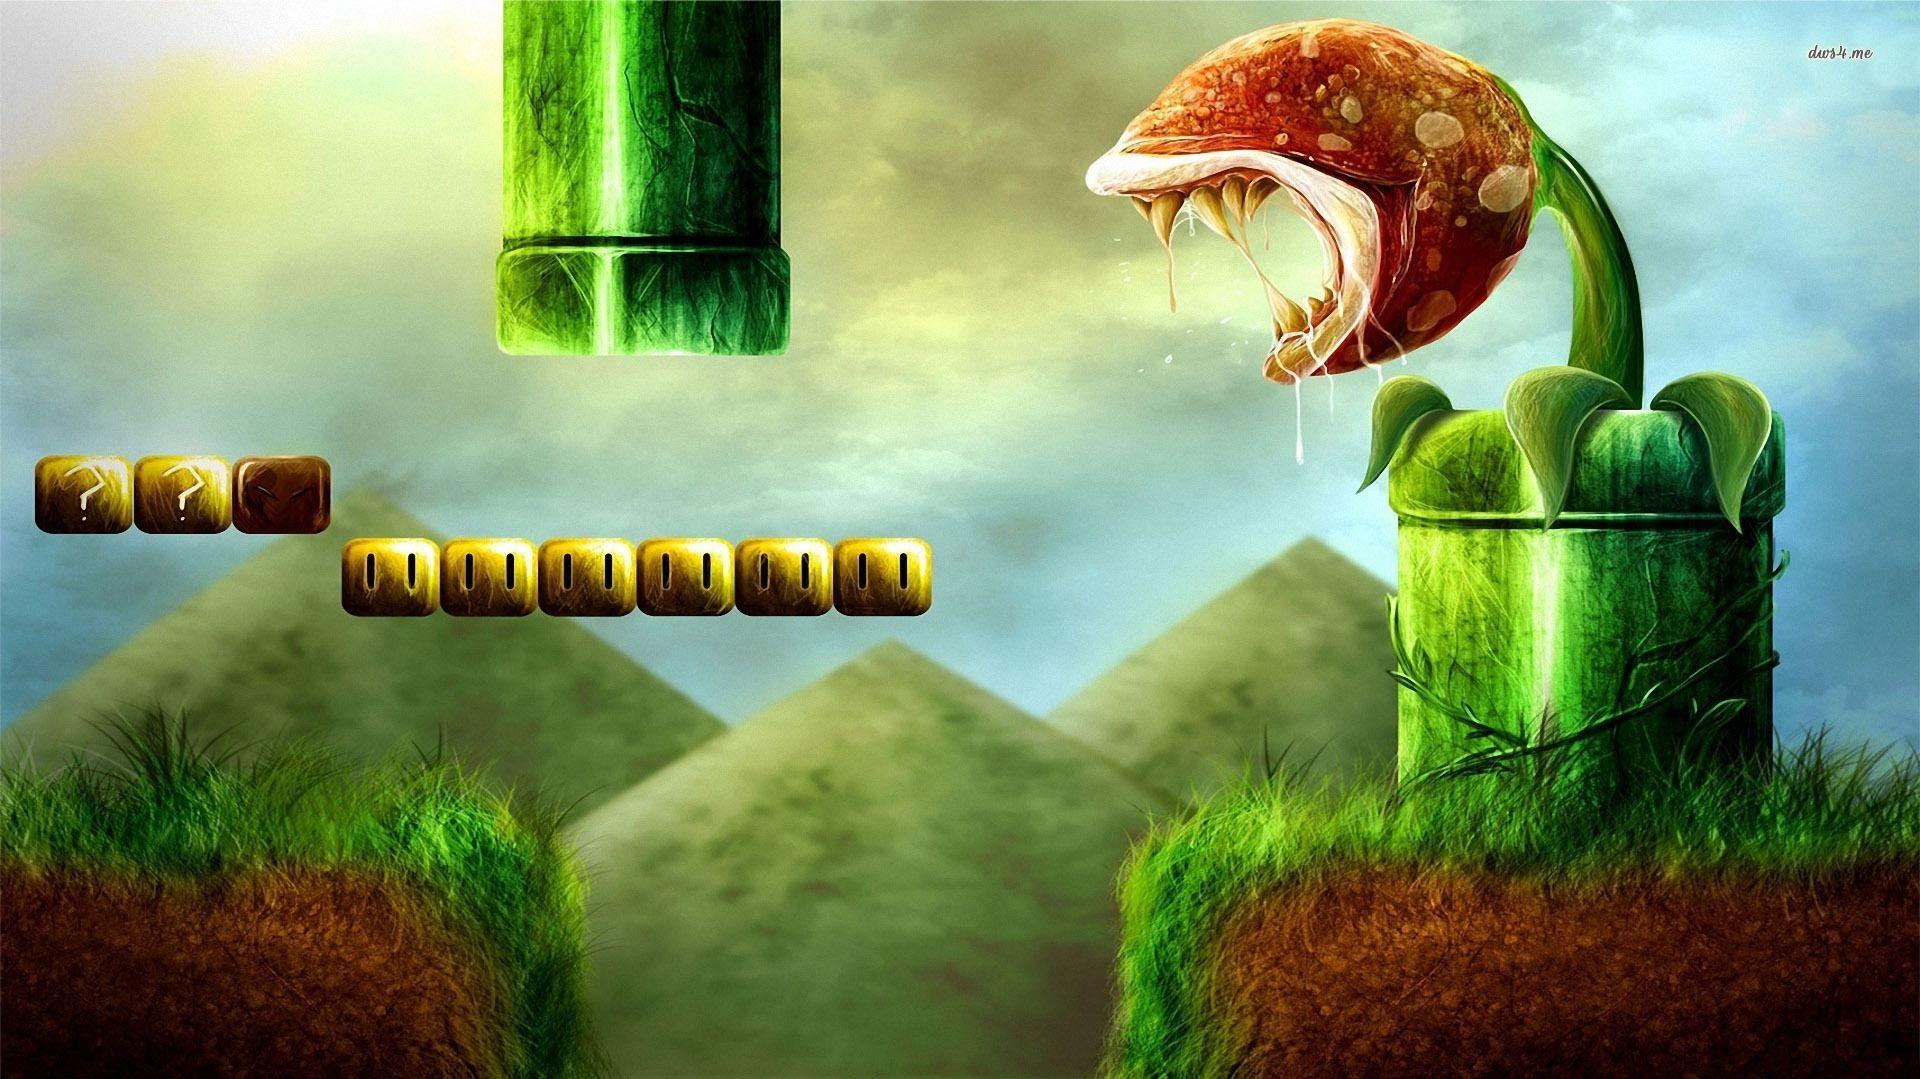 Super Mario Piranha Plant wallpaper Game wallpapers 6562